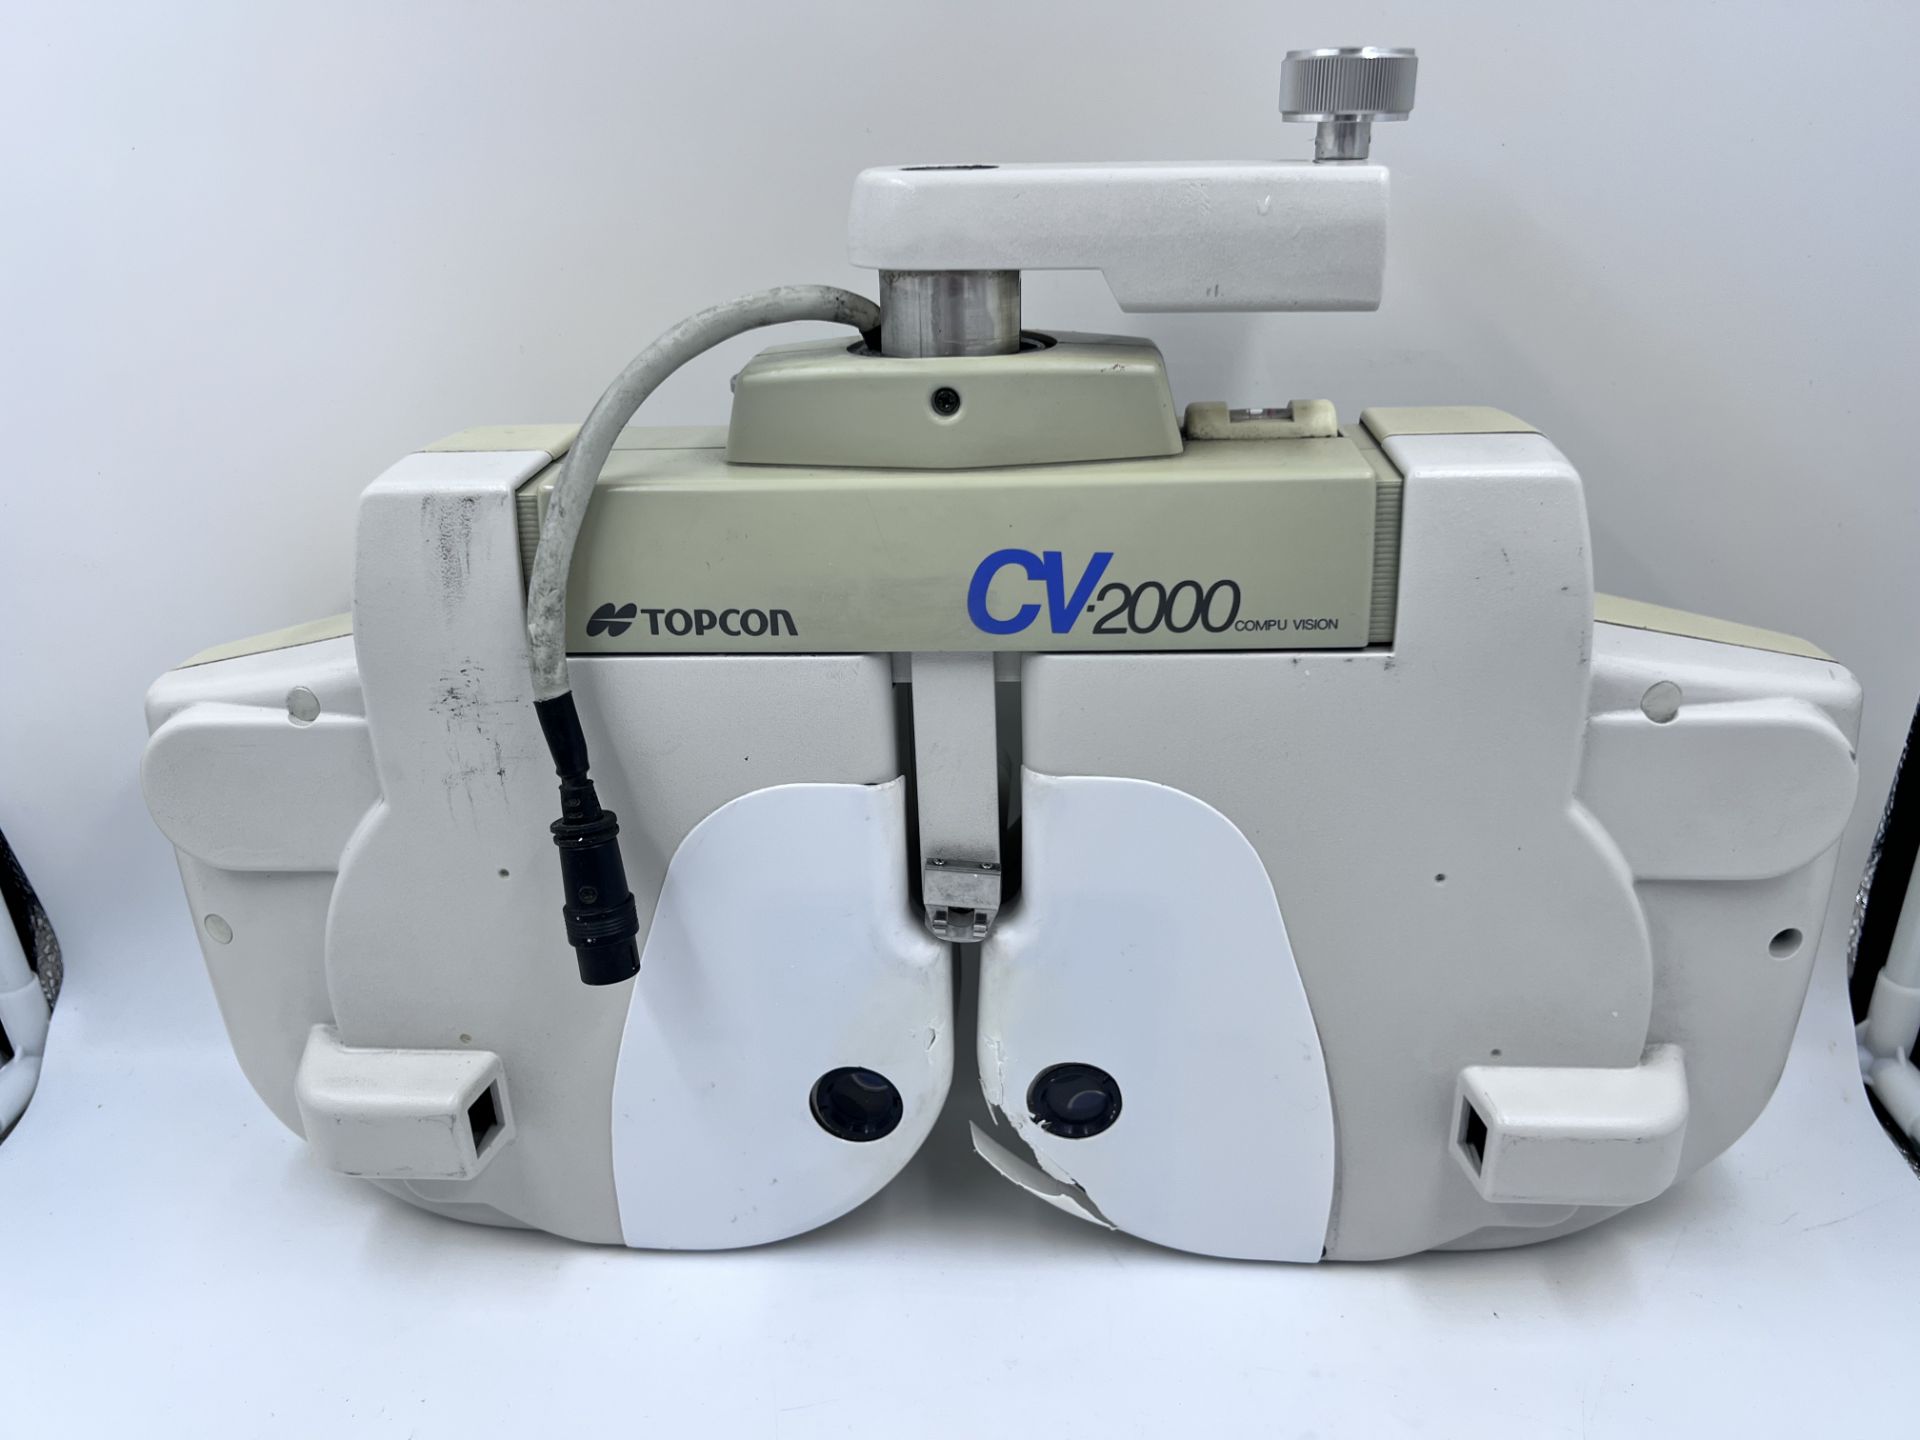 Topcon CV-2000 Compu Vision System Digital Phoroptor - Image 3 of 3